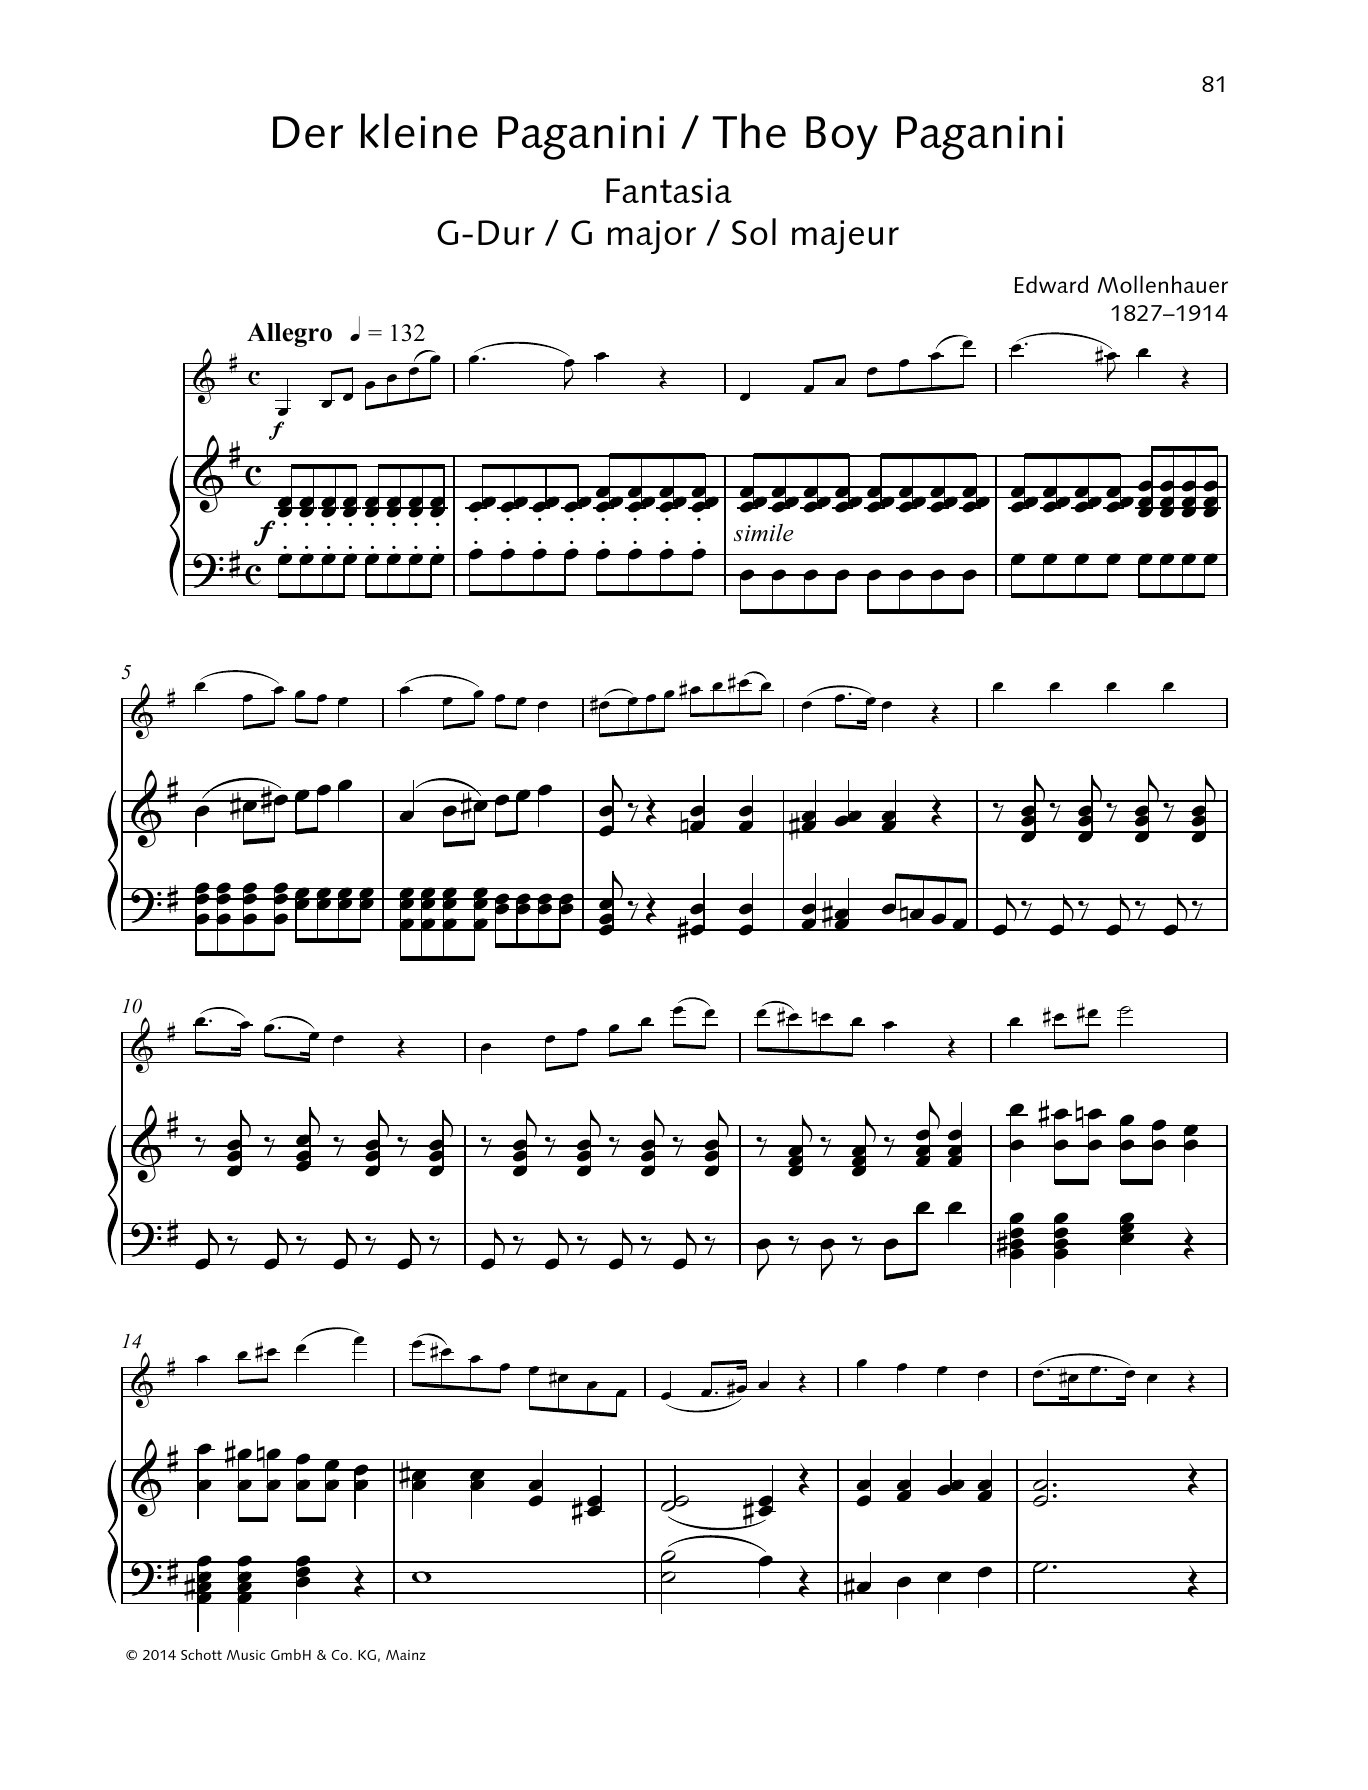 The Boy Paganini sheet music